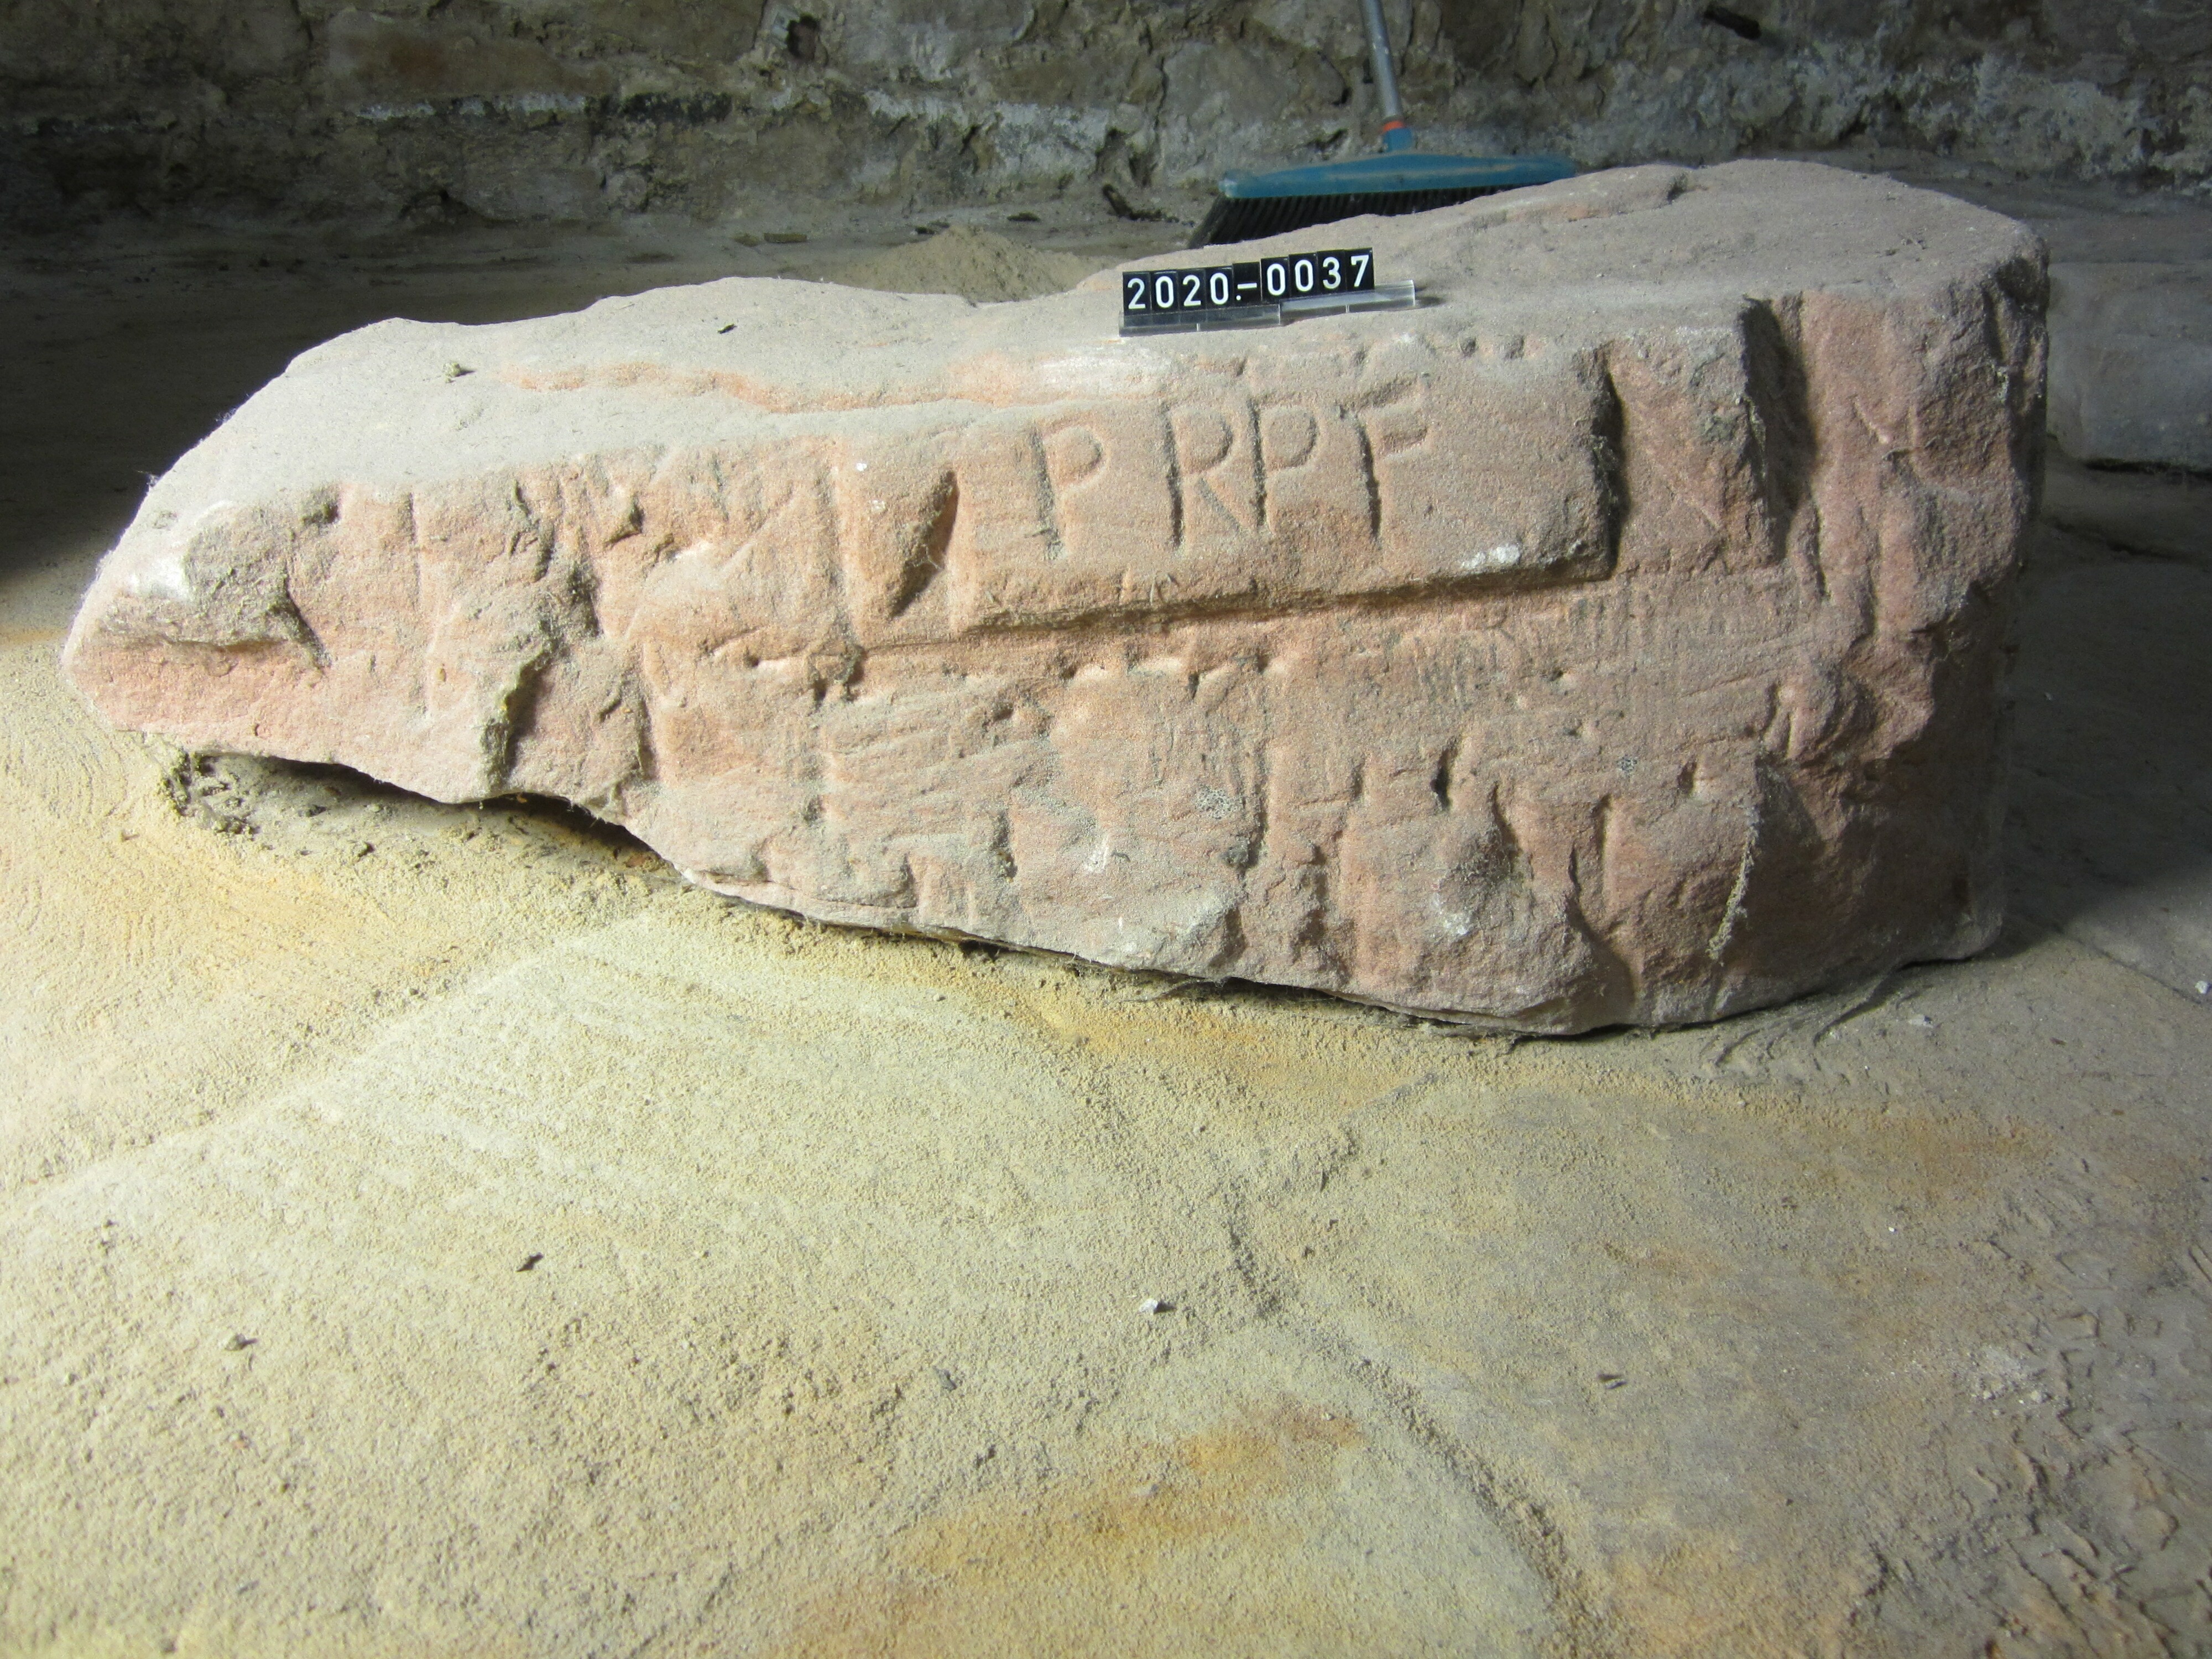 Sandsteinfragment mit Inschrift "PPPF", Kriemhildenstuhl (Stadtmuseum Bad Dürkheim CC BY-NC-SA)